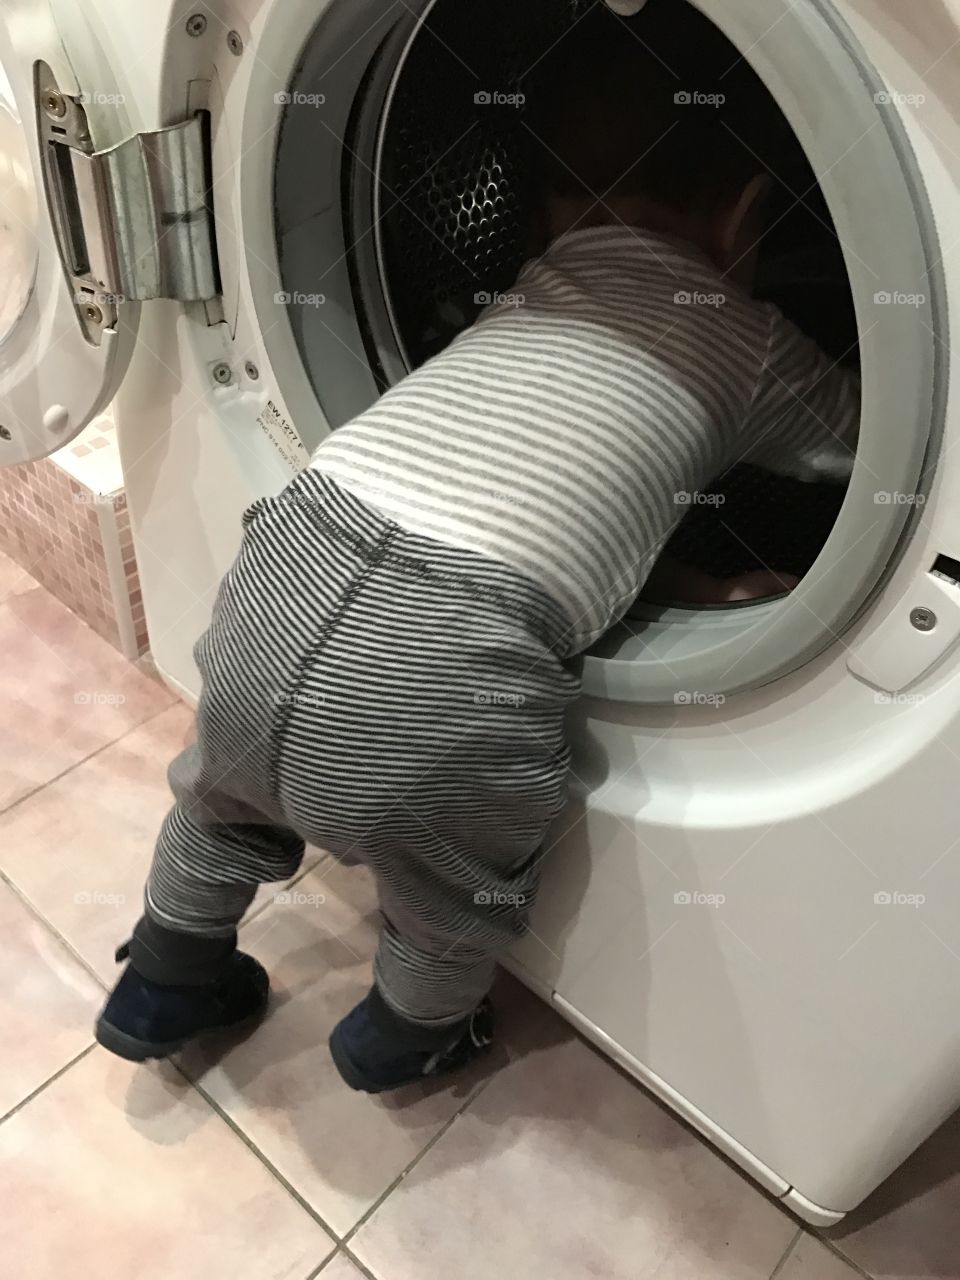 A child climbing inside a washing machine